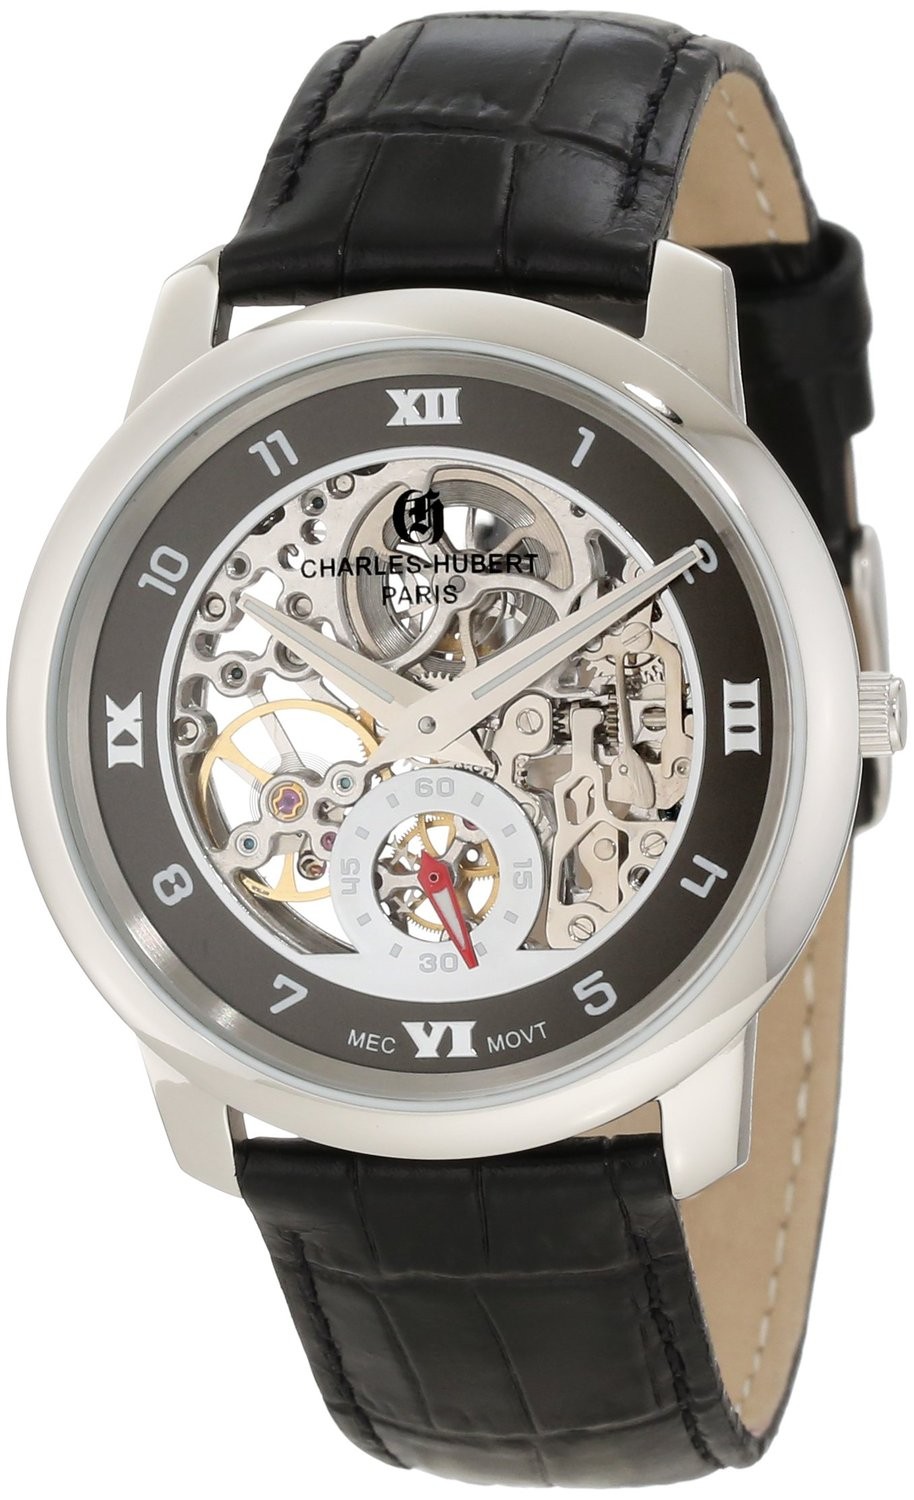 Charles-Hubert Paris Men's Stainless Steel Mechanical Watch